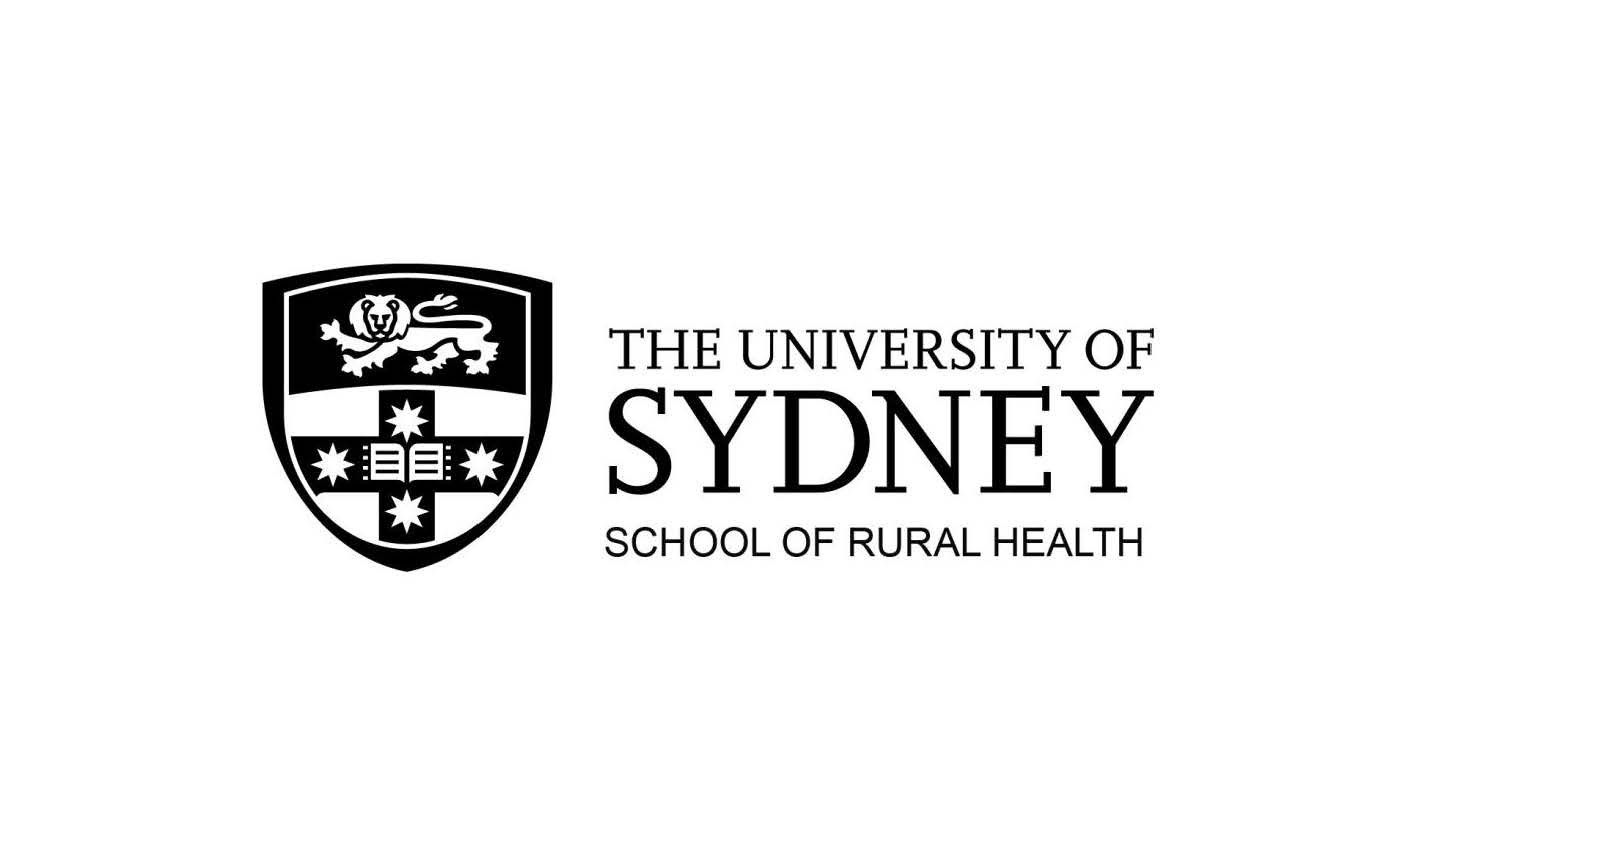 School of Rural Health, The University of Sydney